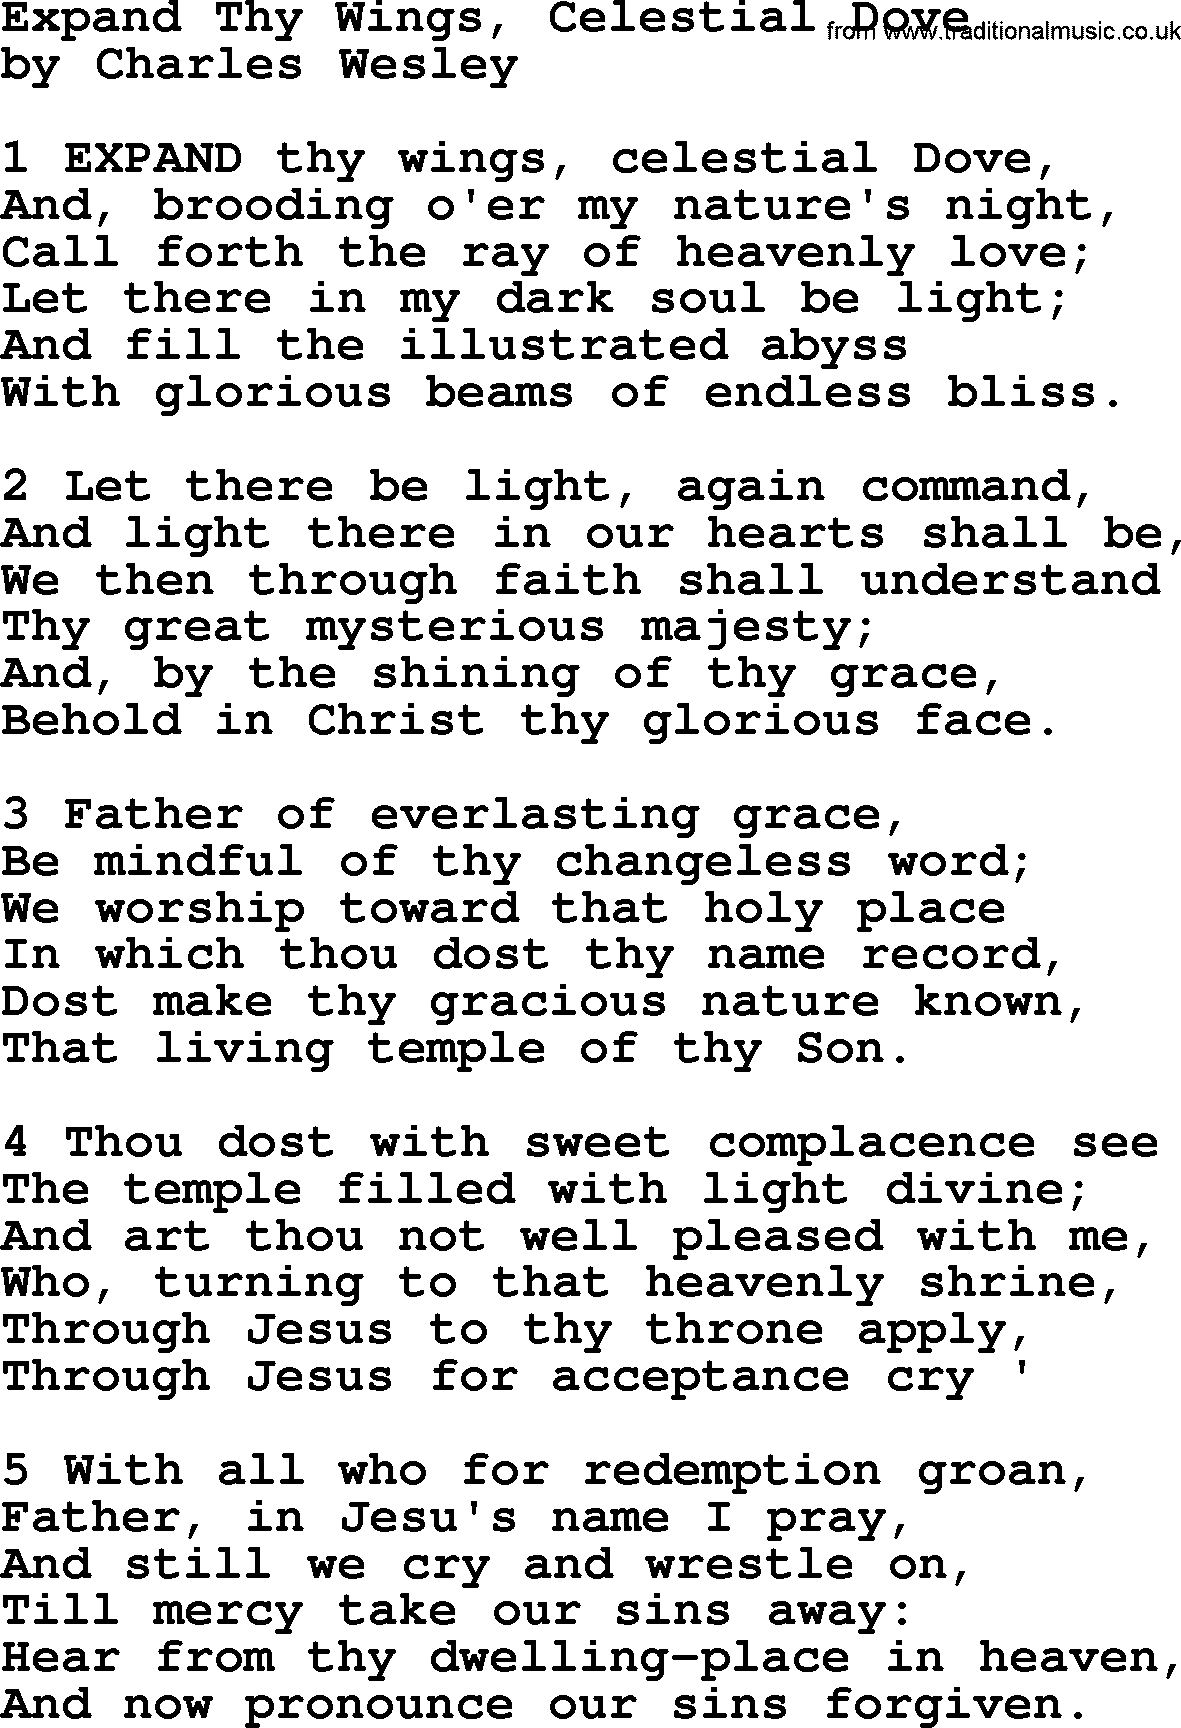 Charles Wesley hymn: Expand Thy Wings, Celestial Dove, lyrics